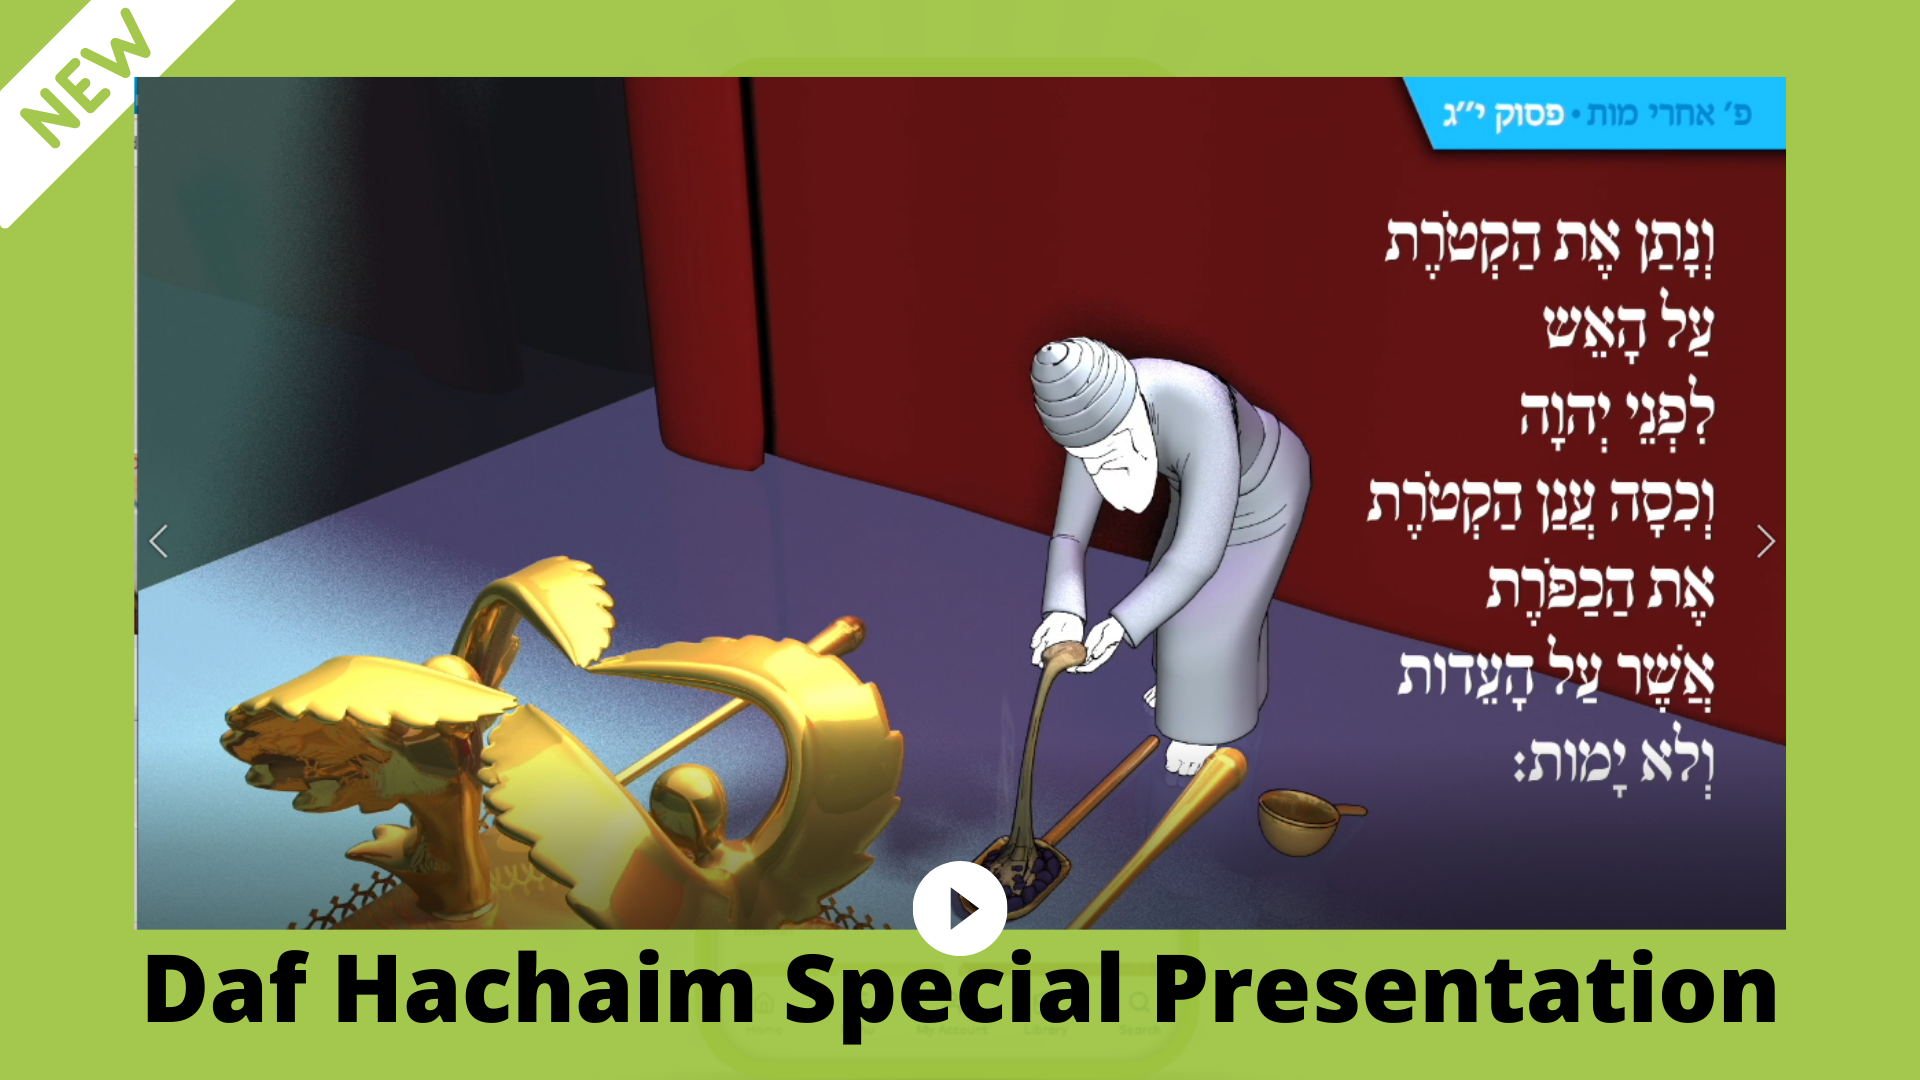 Special Presentation On Avodas Yom Kippur For This Weeks Parsha